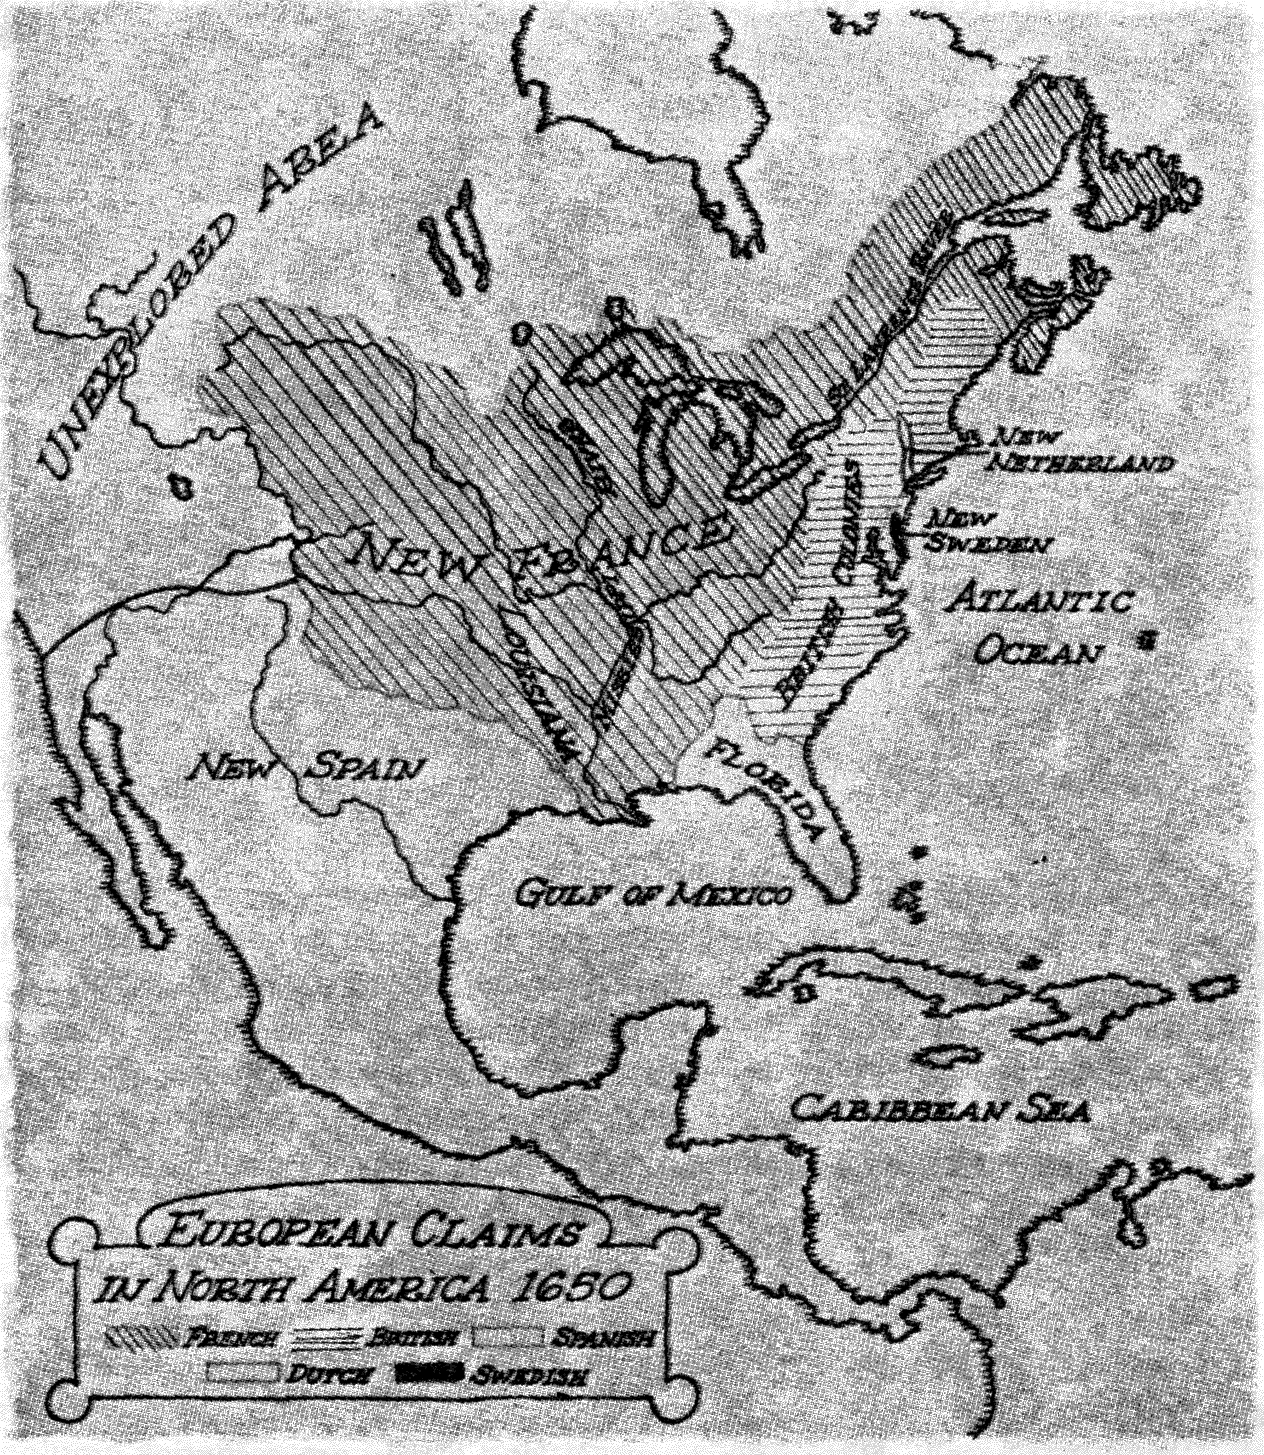 European claims in North America 1650